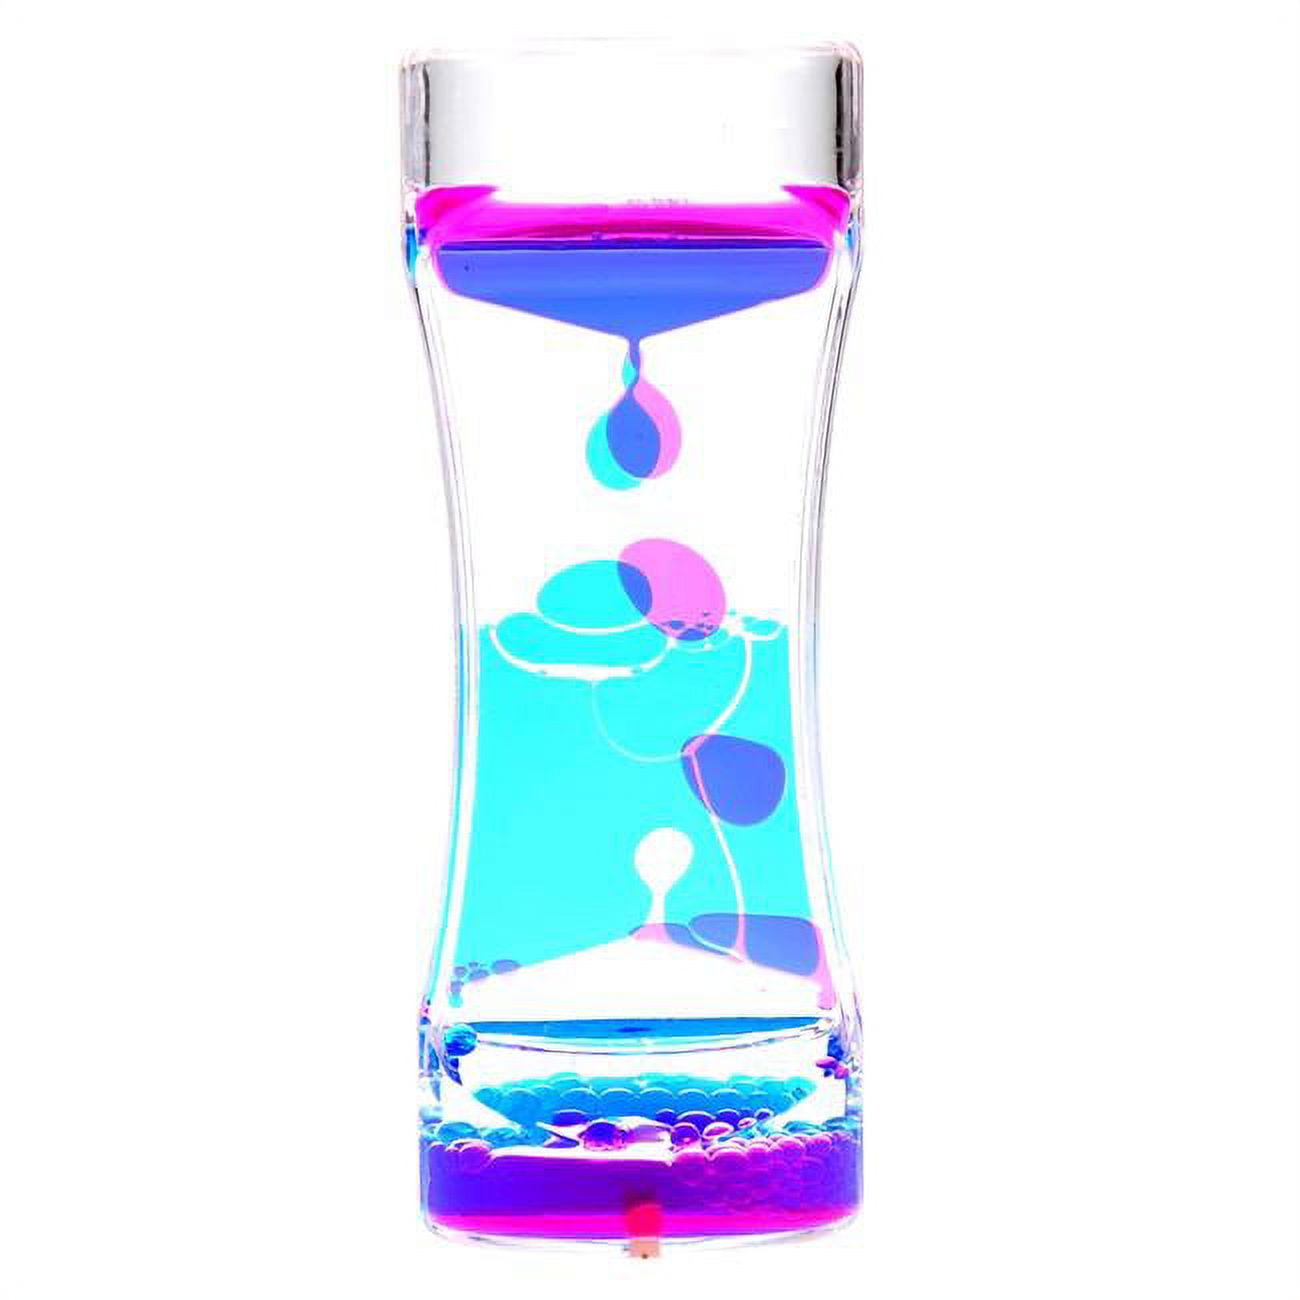 Tg415j Blue Pink Liquid Motion Bubbler - Blue & Pink